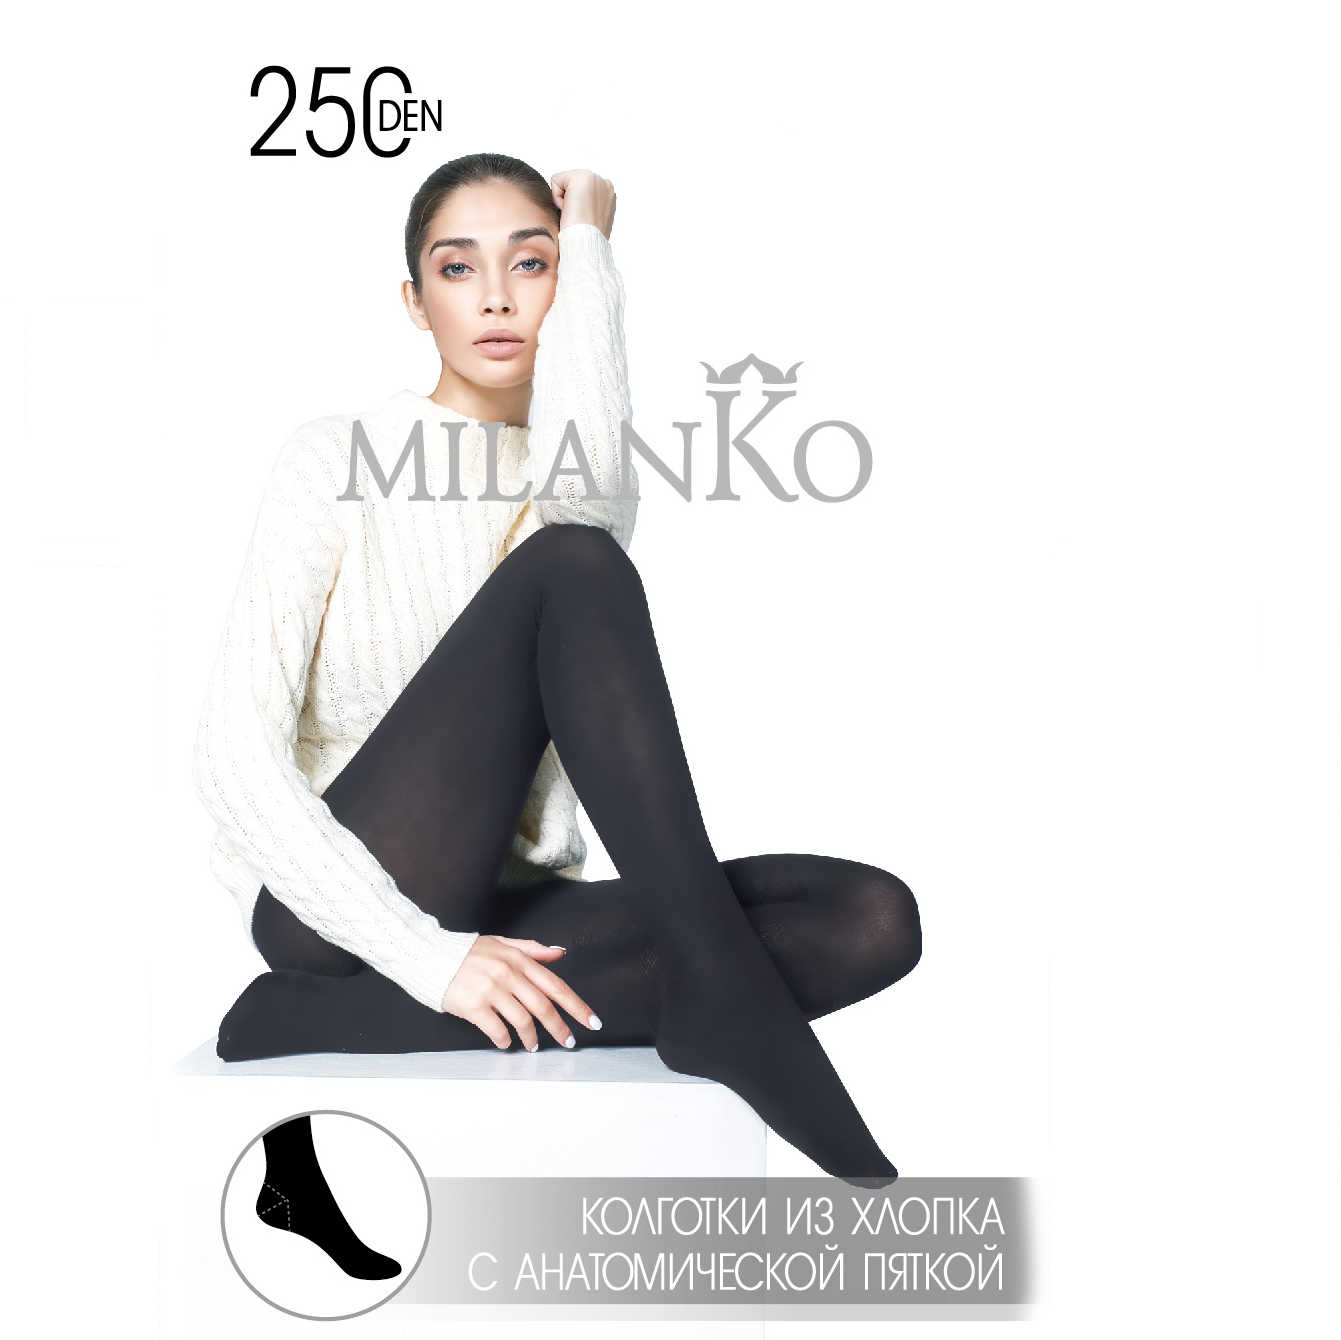 MILANKO    Женские колготки из хлопка MilanKo K-040